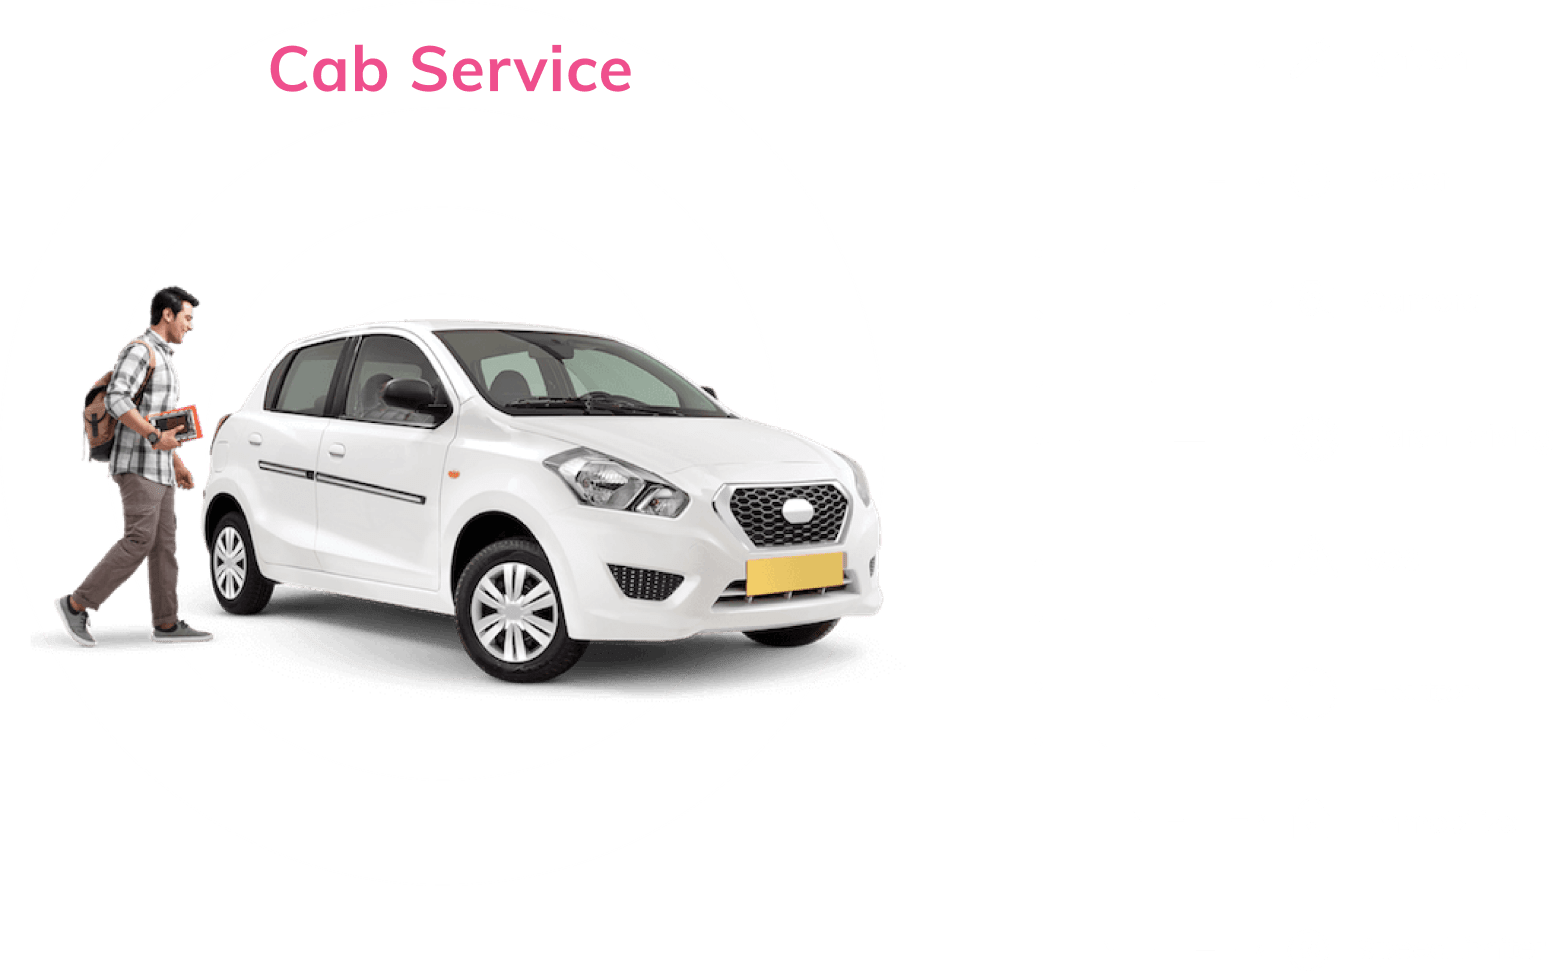 cab-service-image